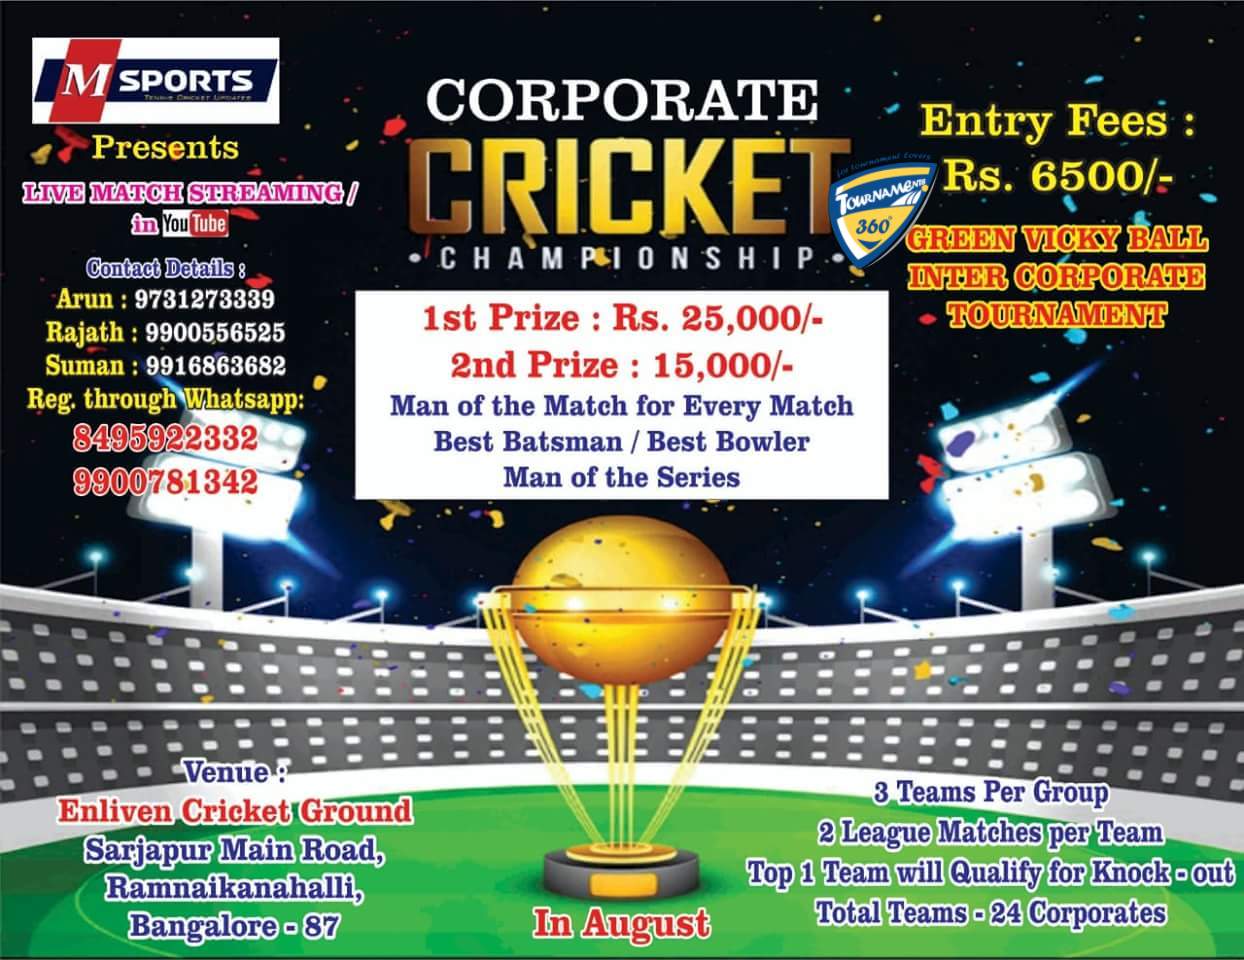 Corporate Cricket Championship